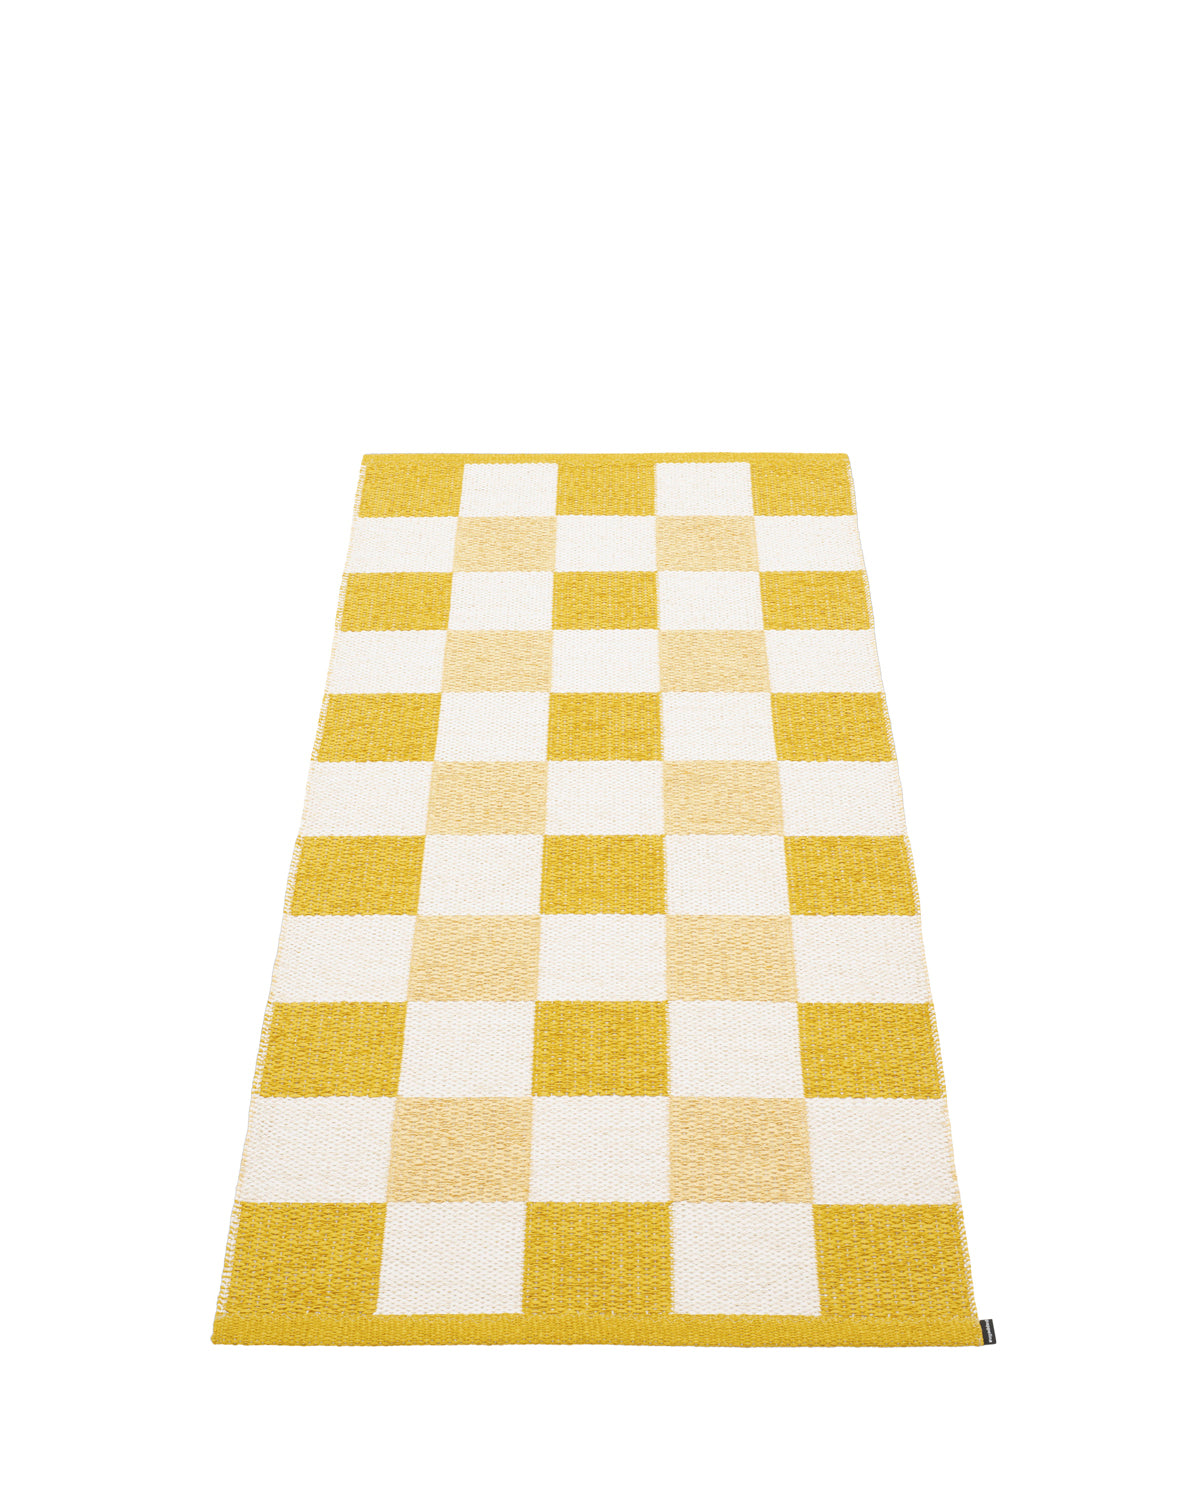 Pappelina Rug PIX Mustard/Vanilla/Pale Yellow 2.25 x 5.25 ft  image 1